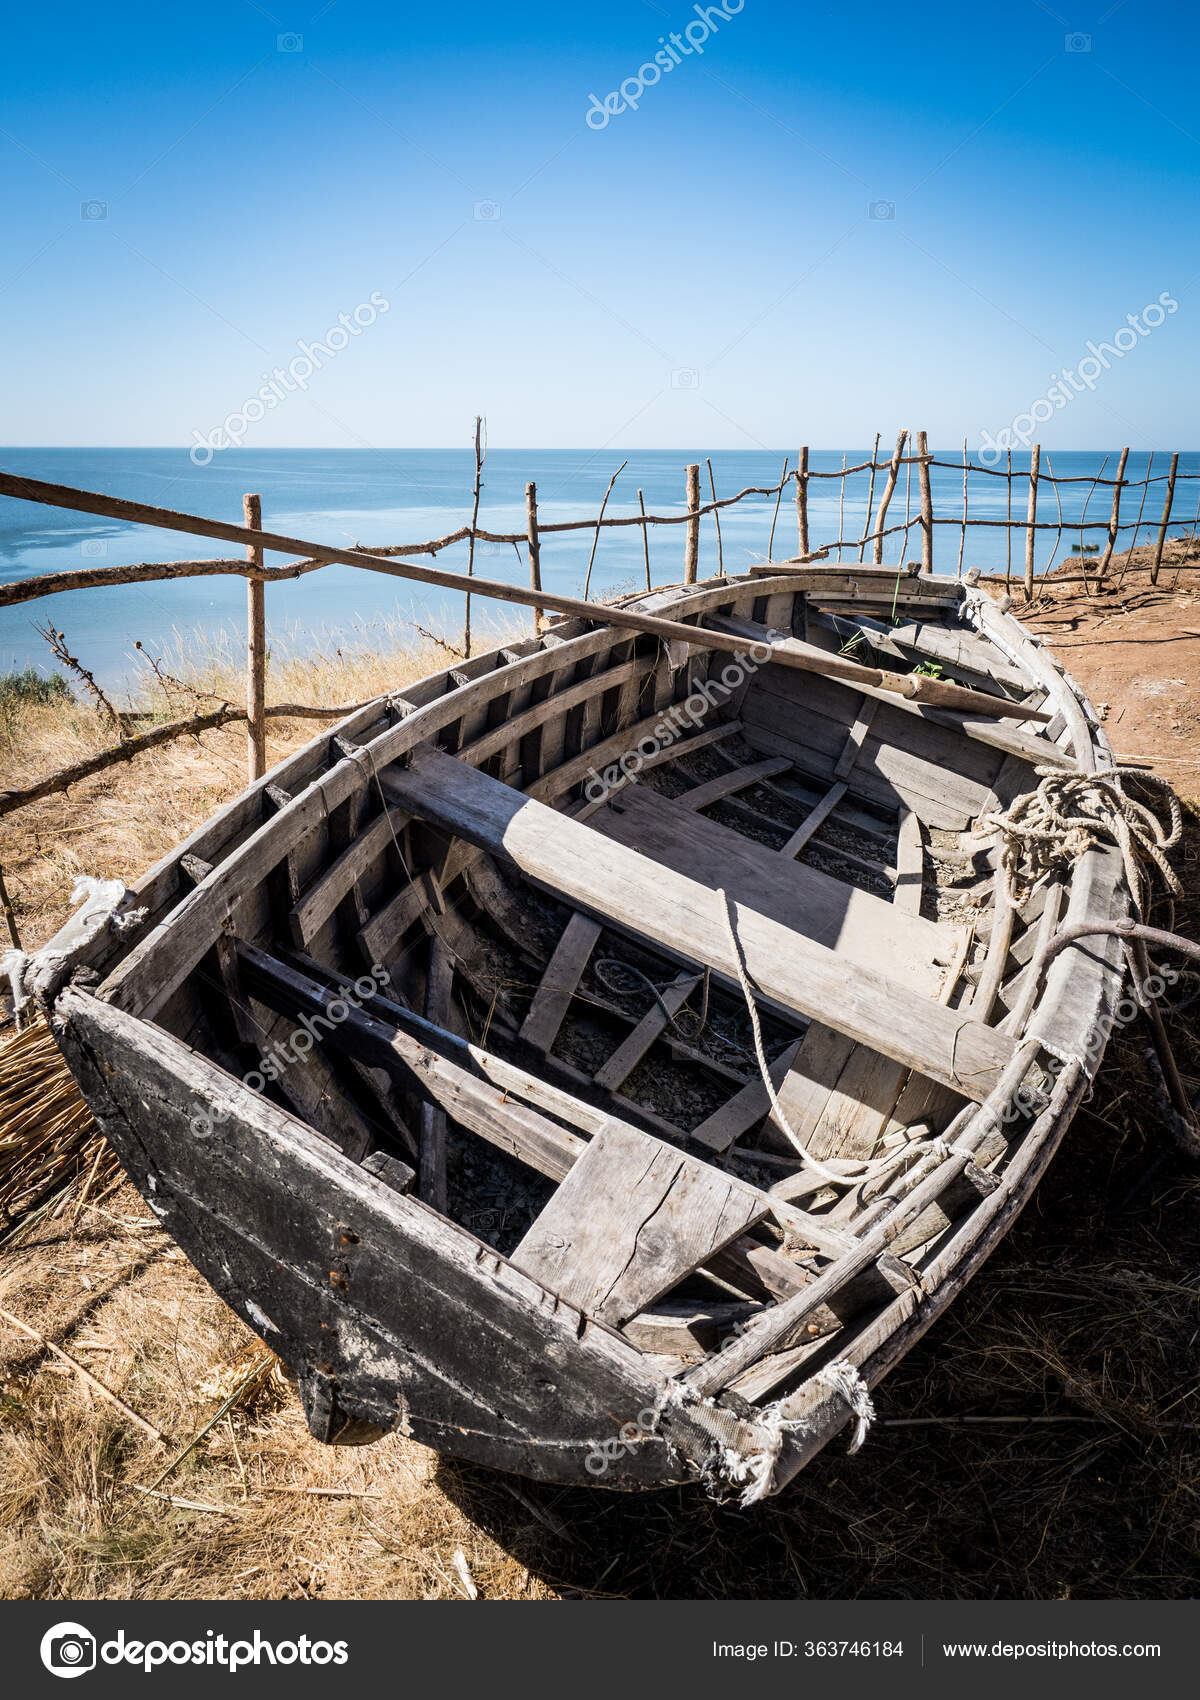 https://st3.depositphotos.com/8004864/36374/i/1600/depositphotos_363746184-stock-photo-old-empty-vintage-fishing-boat.jpg